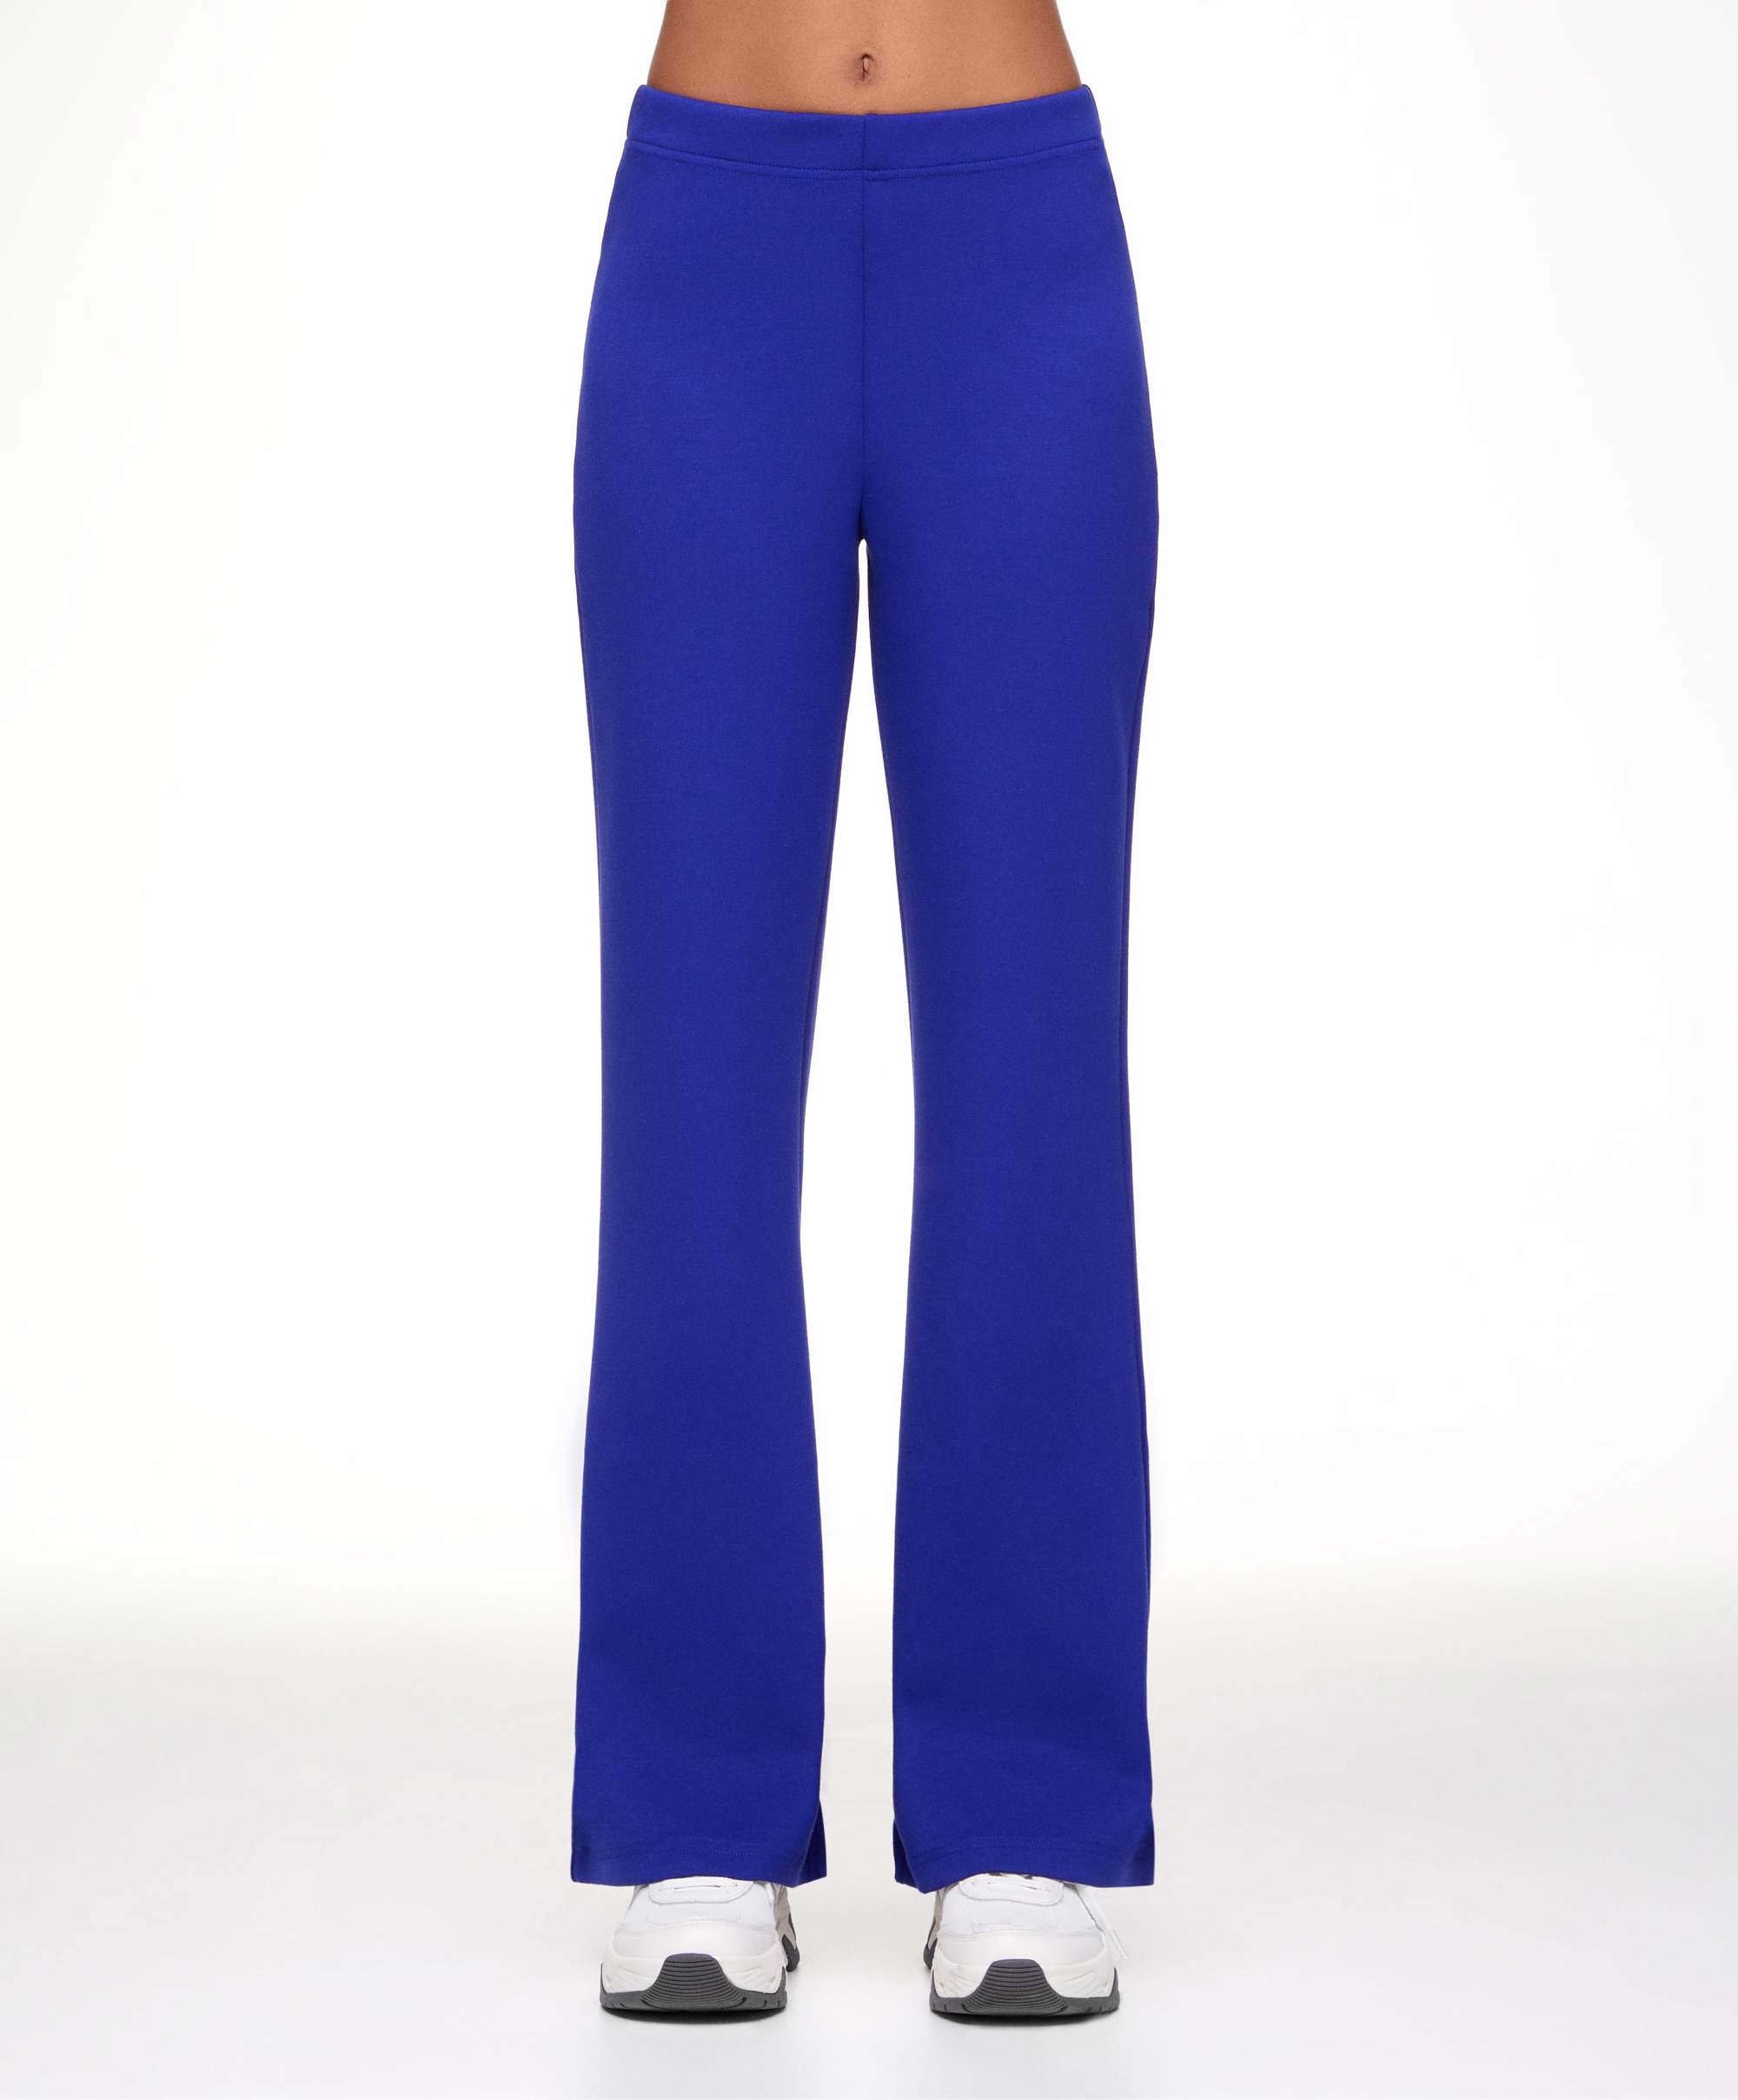 Pantalones flare de color azul cobalto